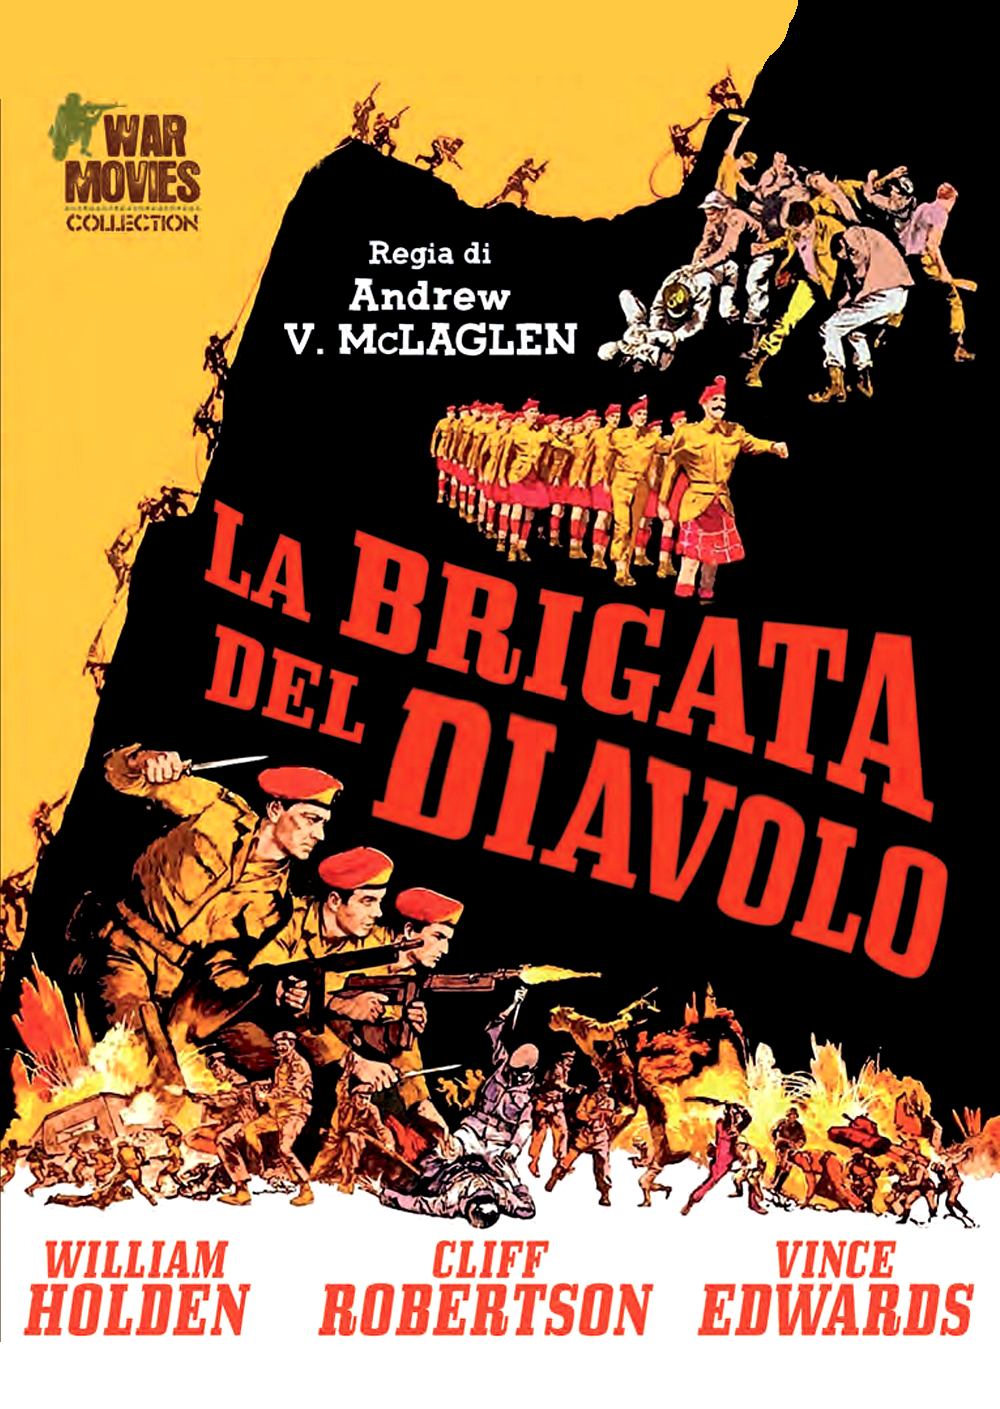 La brigata del diavolo (1968)